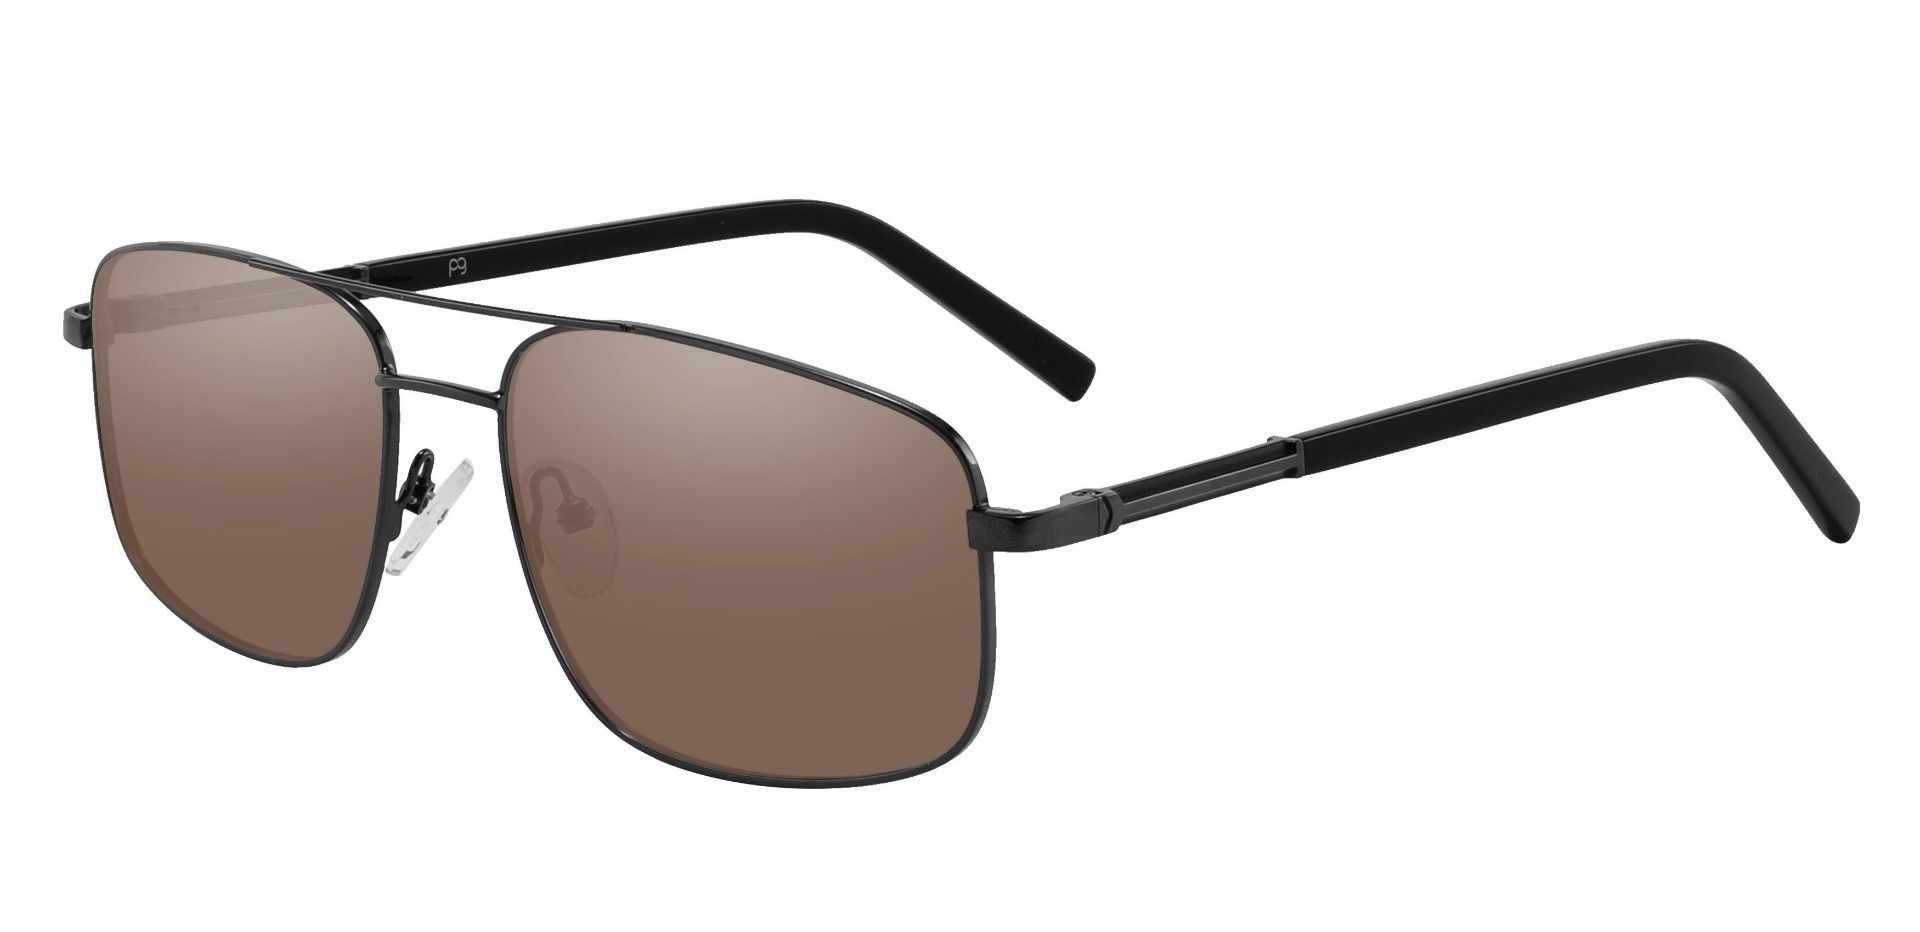 Davenport Aviator Non-Rx Sunglasses - Black Frame With Brown Lenses